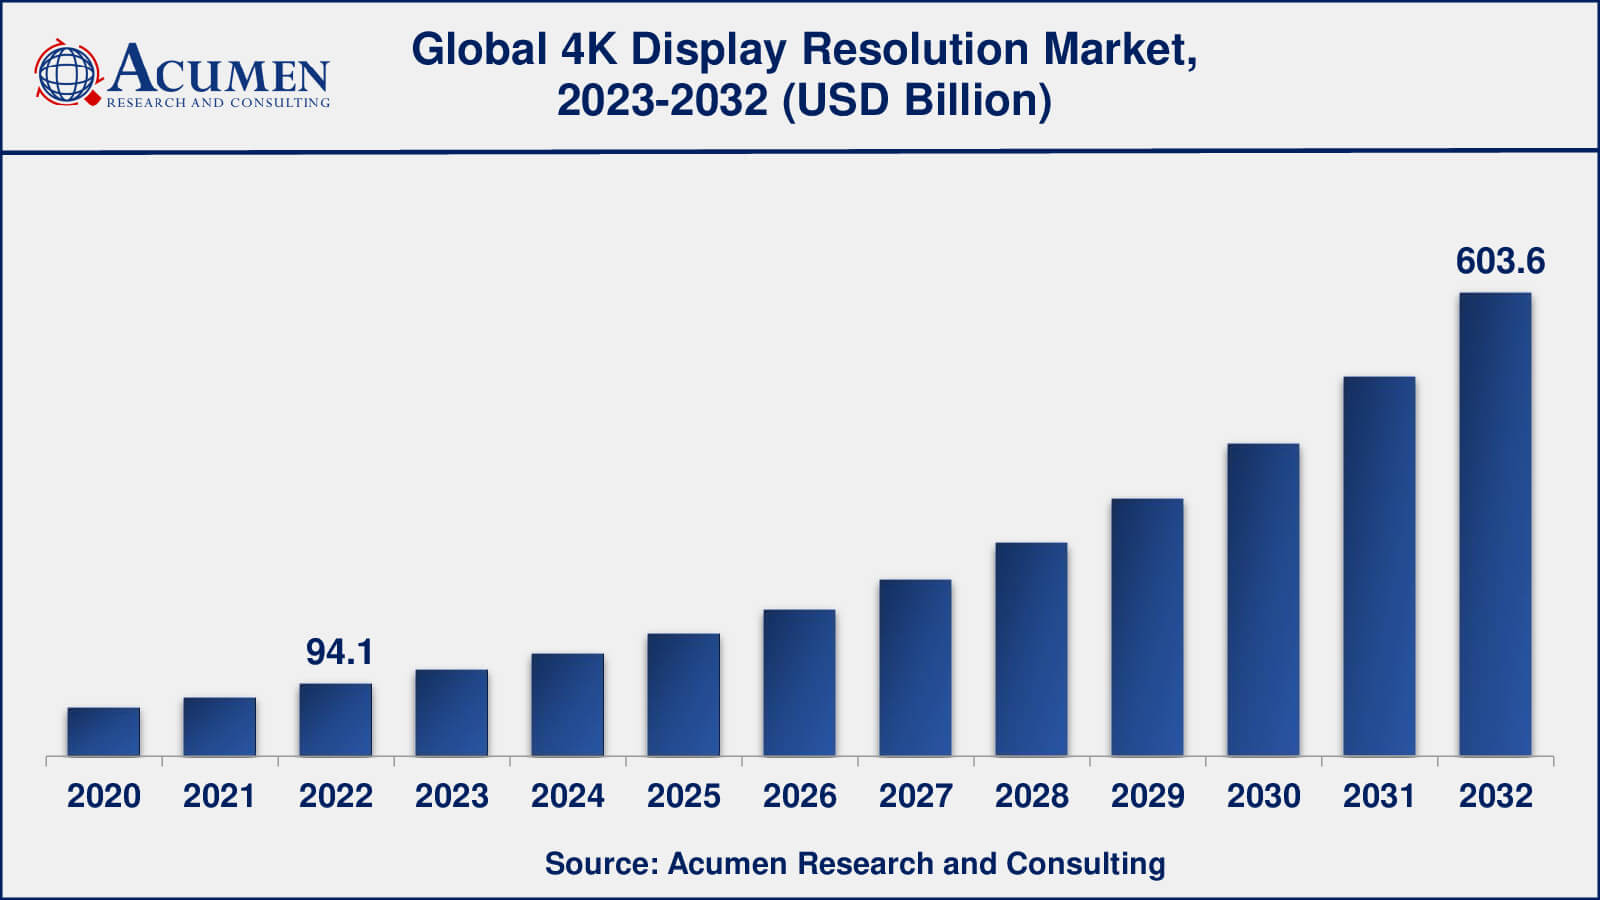 Global 4K Display Resolution Market Dynamics